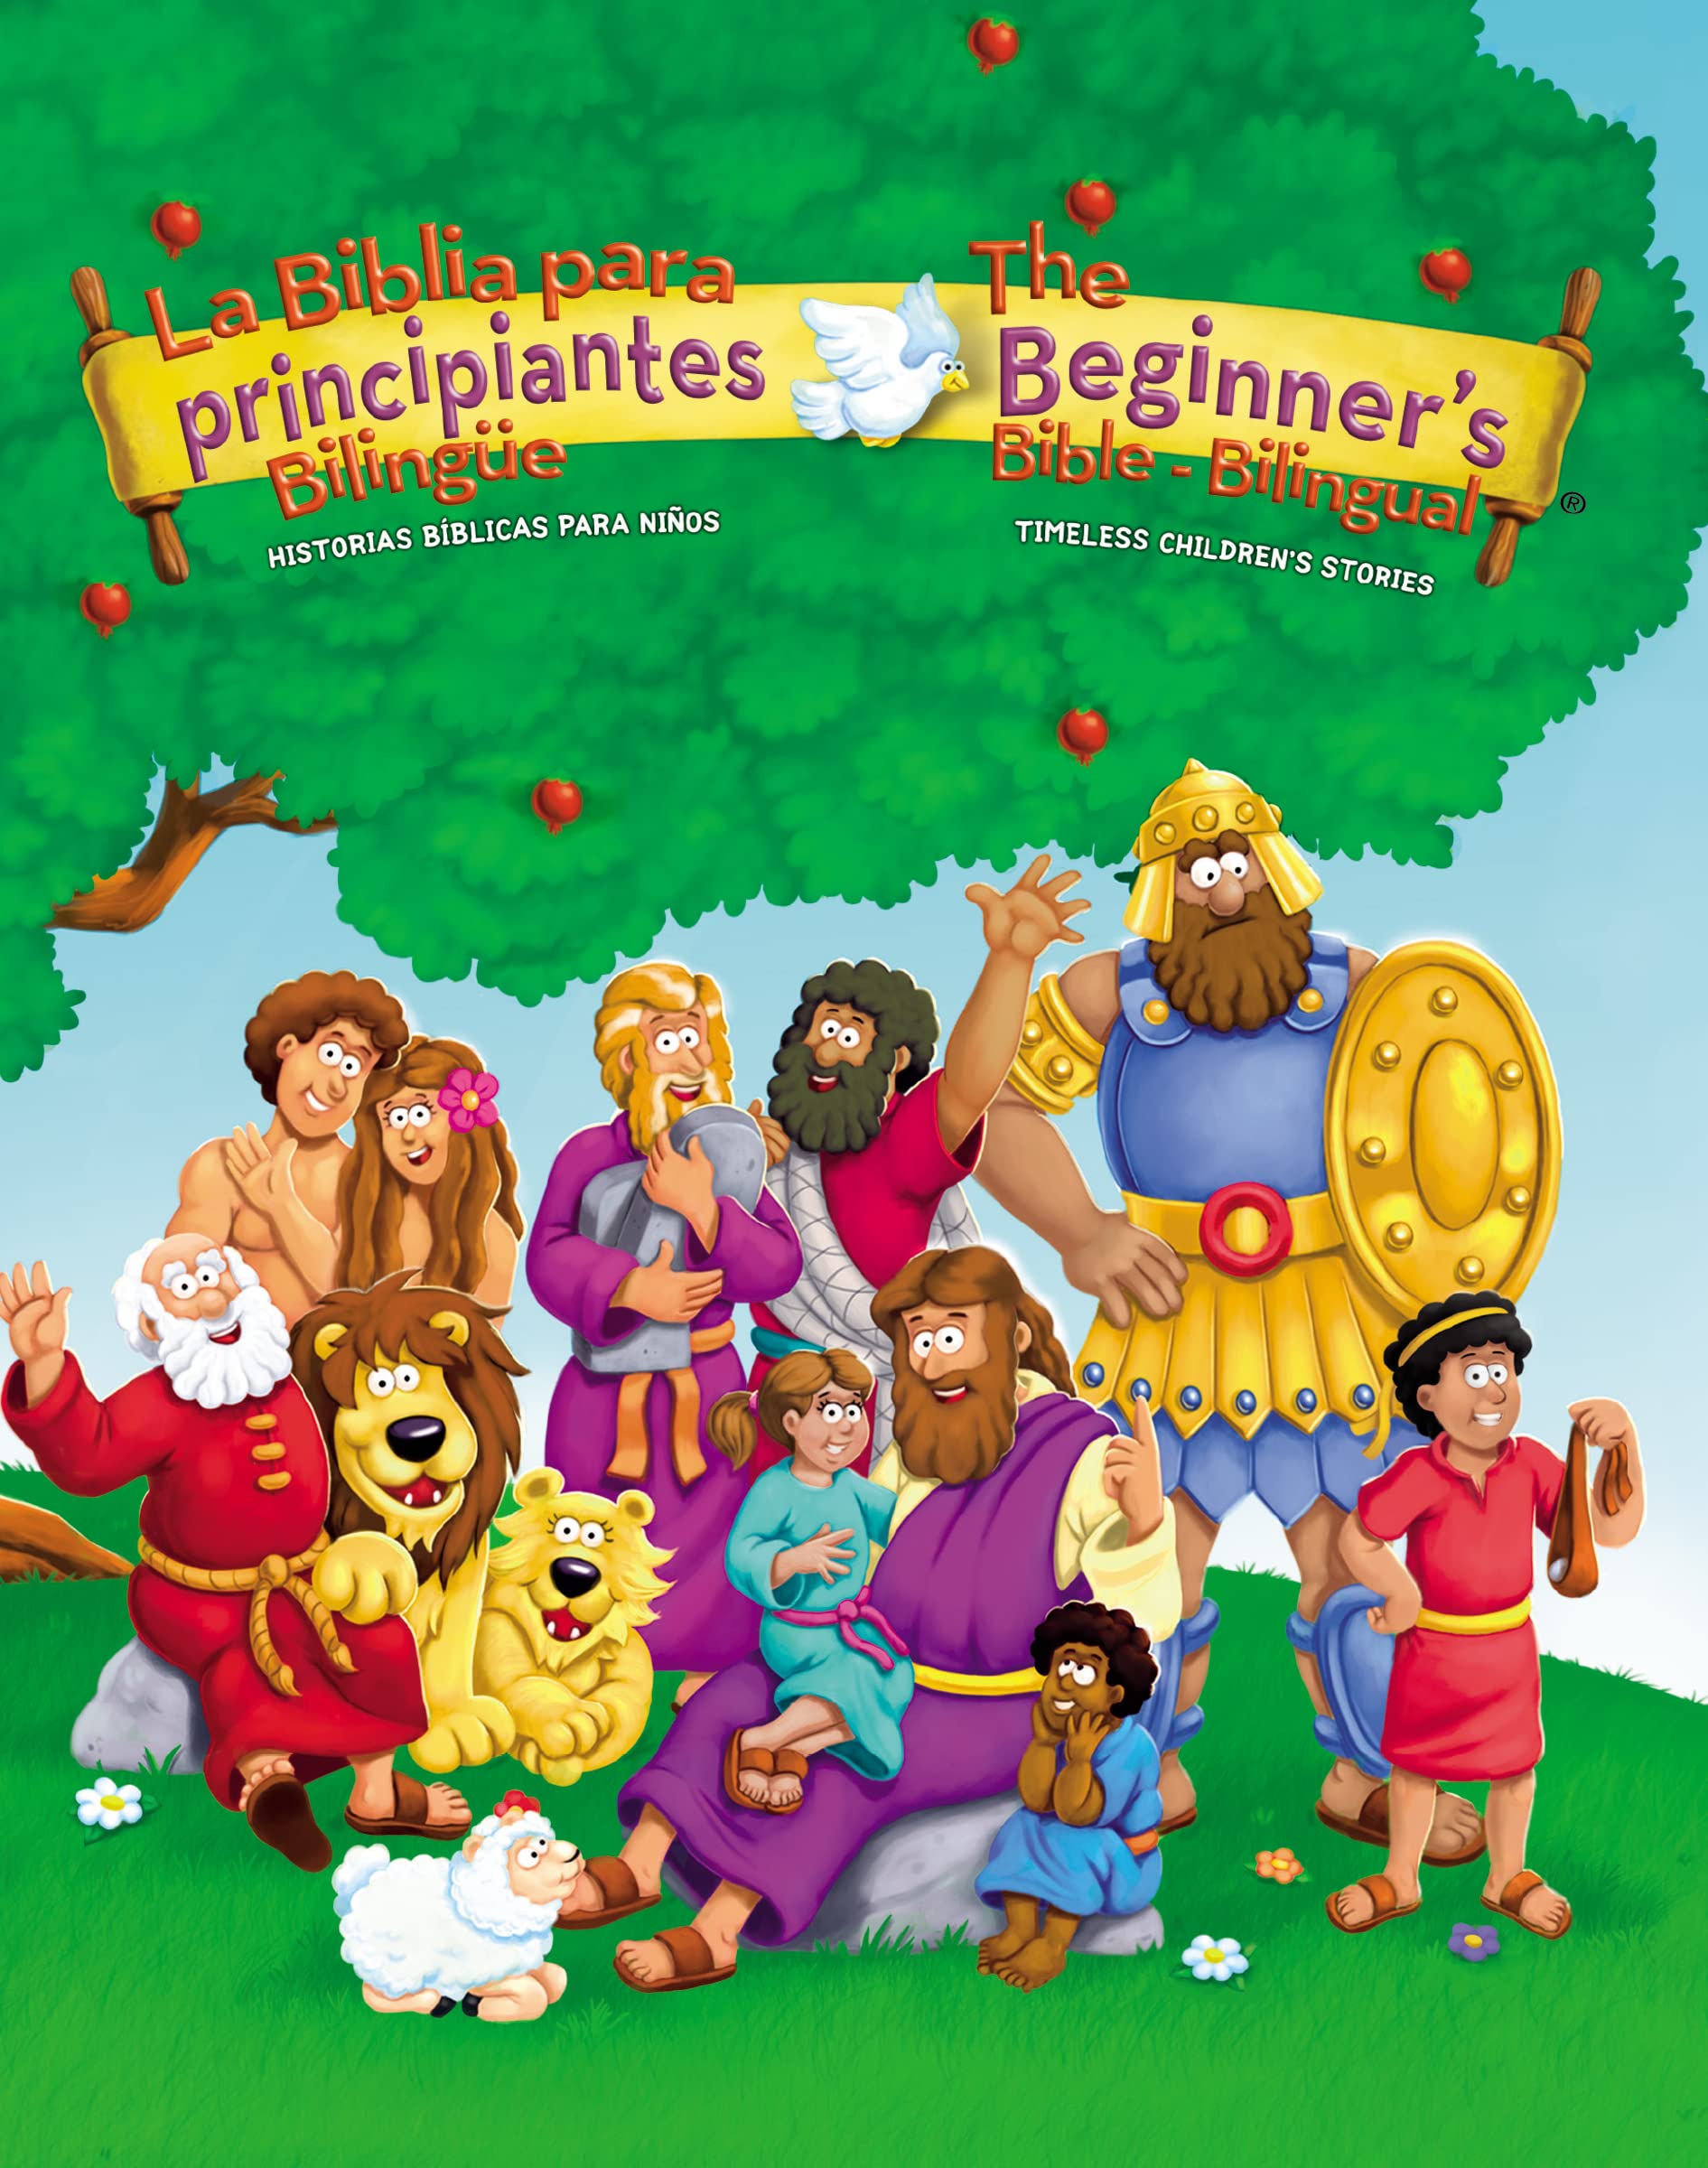 The Beginners Bible (Bilingual) / La Biblia para principiantes (Bilingüe): Timeless Children's Stories (Spanish Edition)